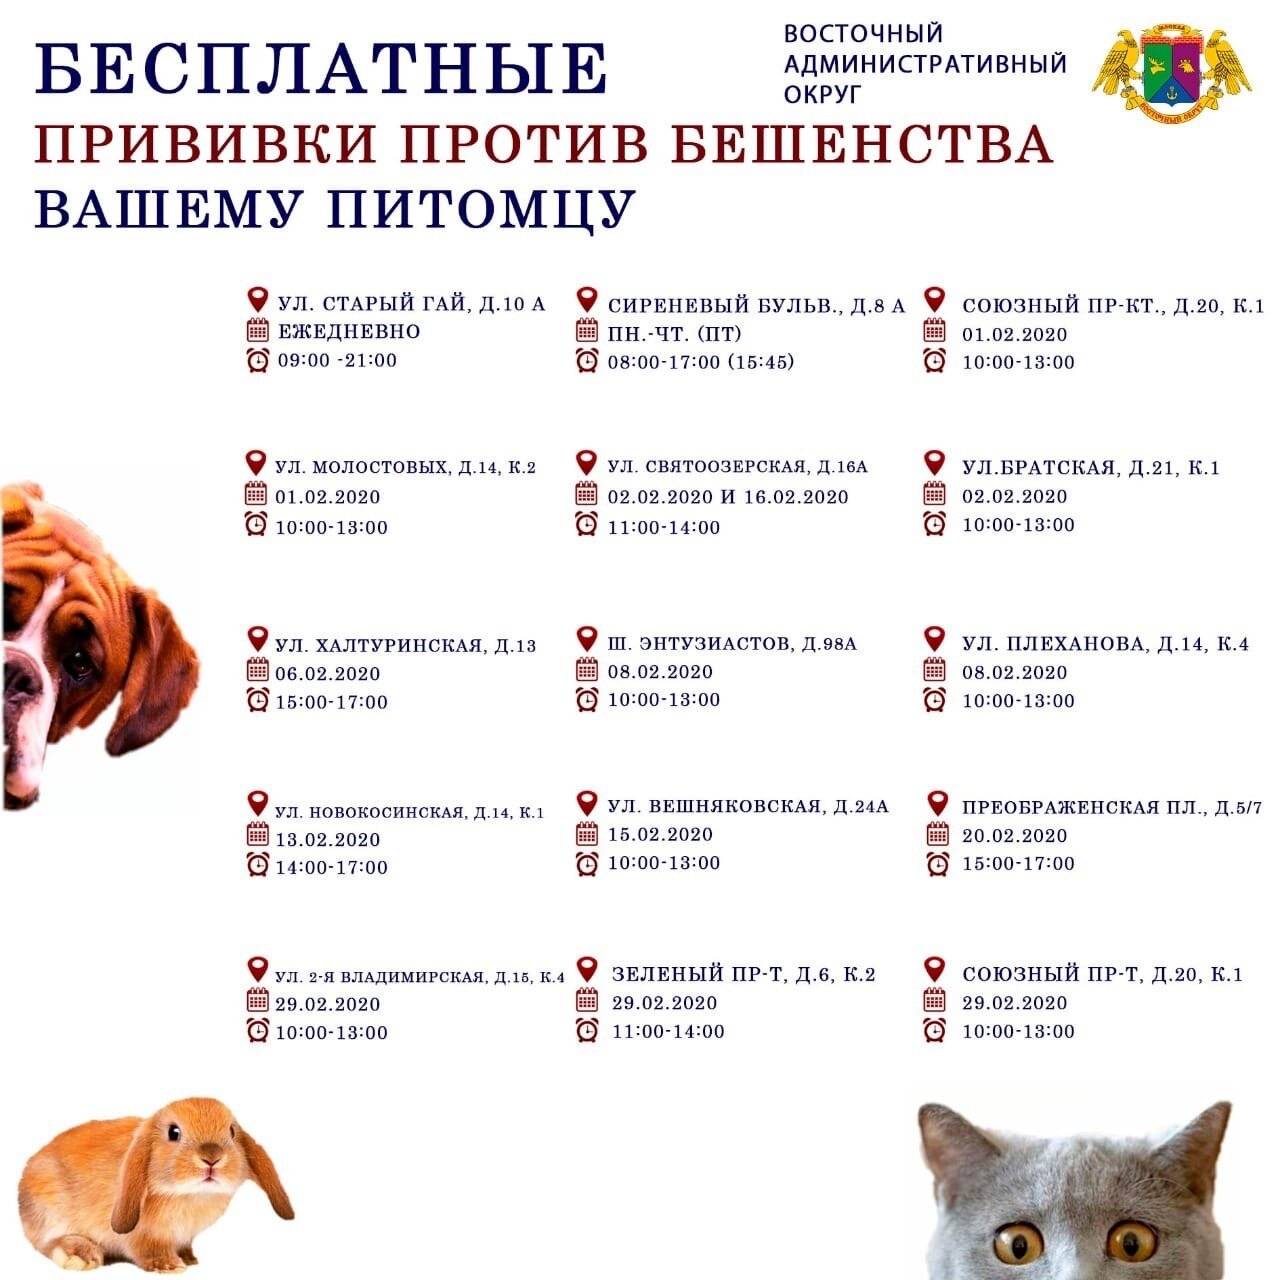 Сколько надо прививок кошке. Вакцинация кота от бешенства. Прививки коту график прививок. Какие прививки делают котам в 1 год. График прививок для котят.